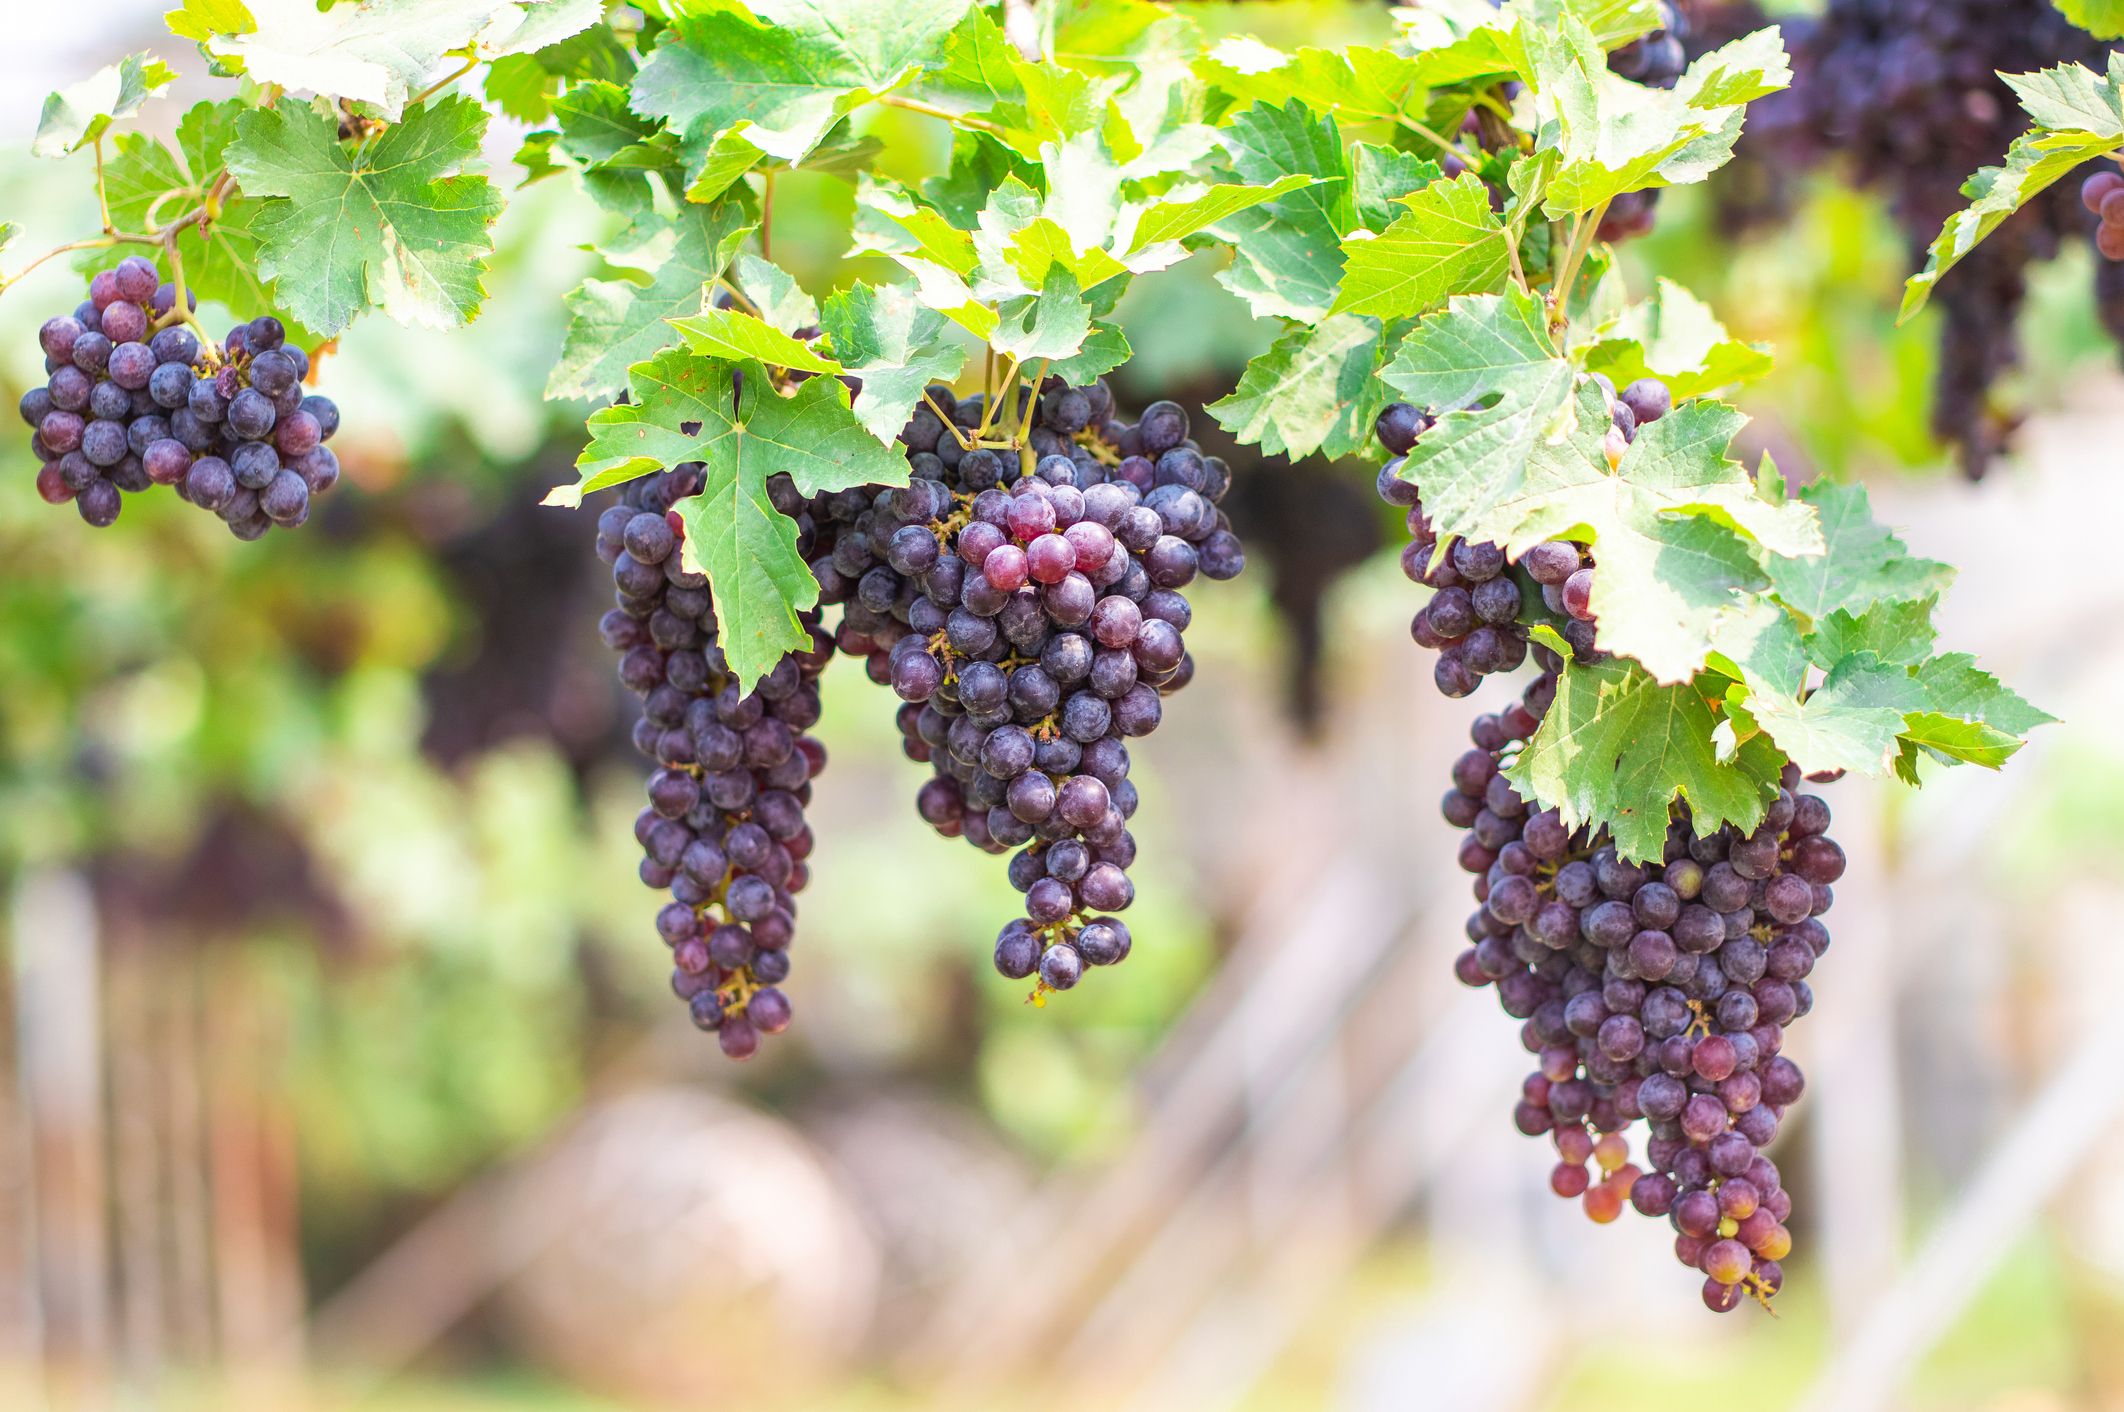 How to Grow Grape Vines - grape vines for sale